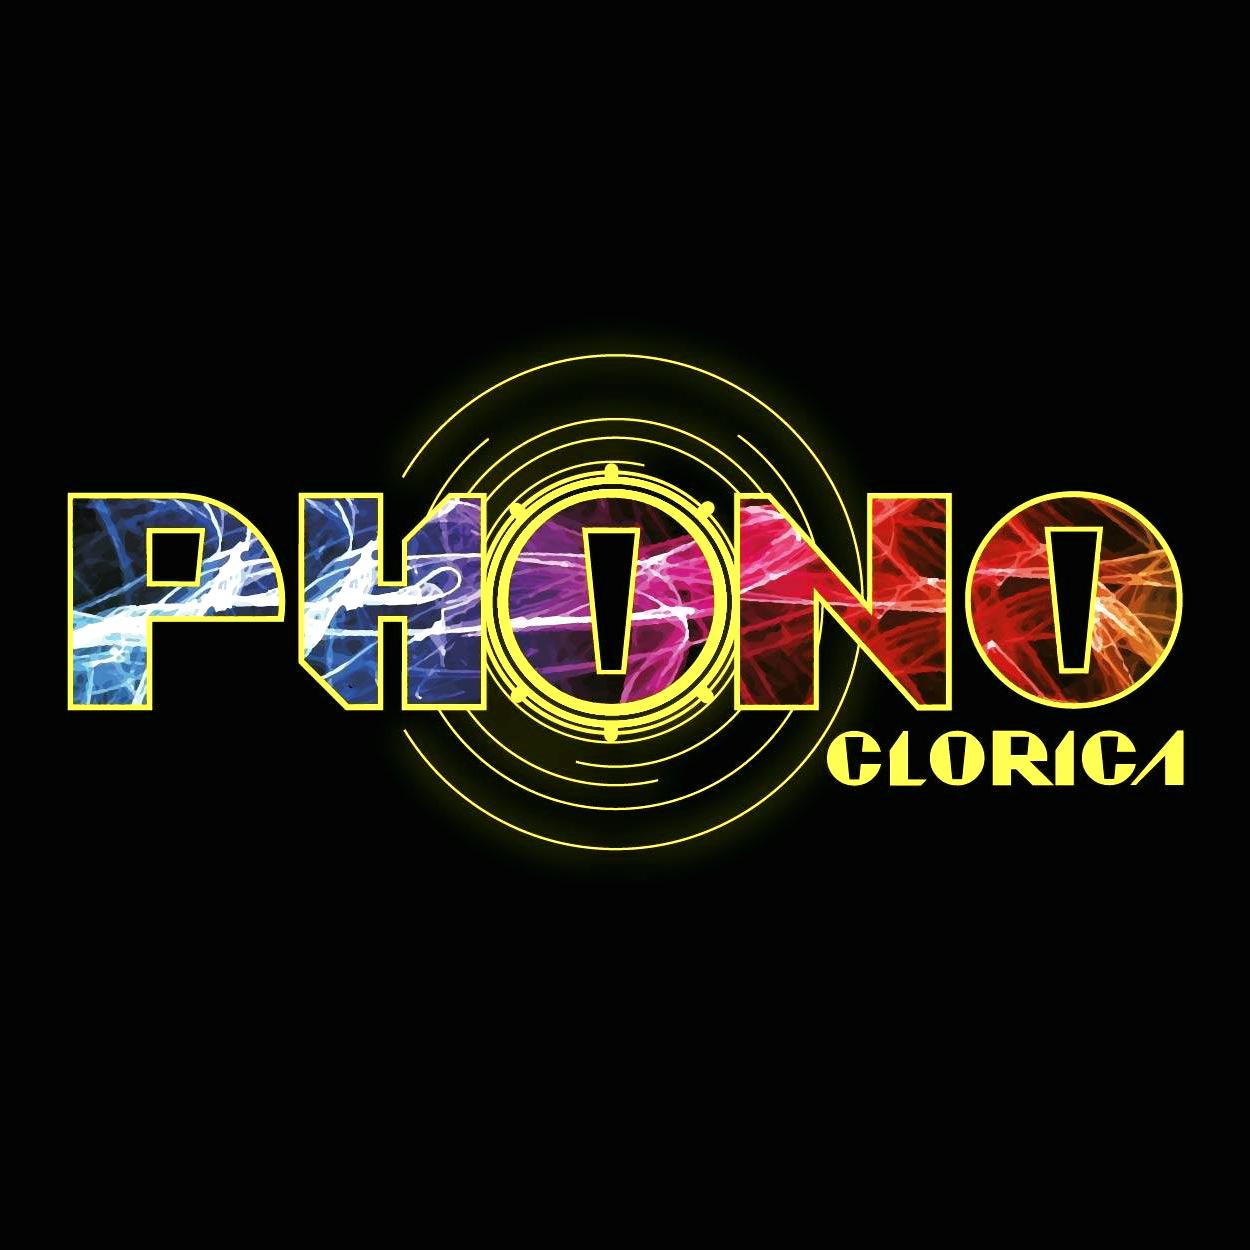 Phonoclórica